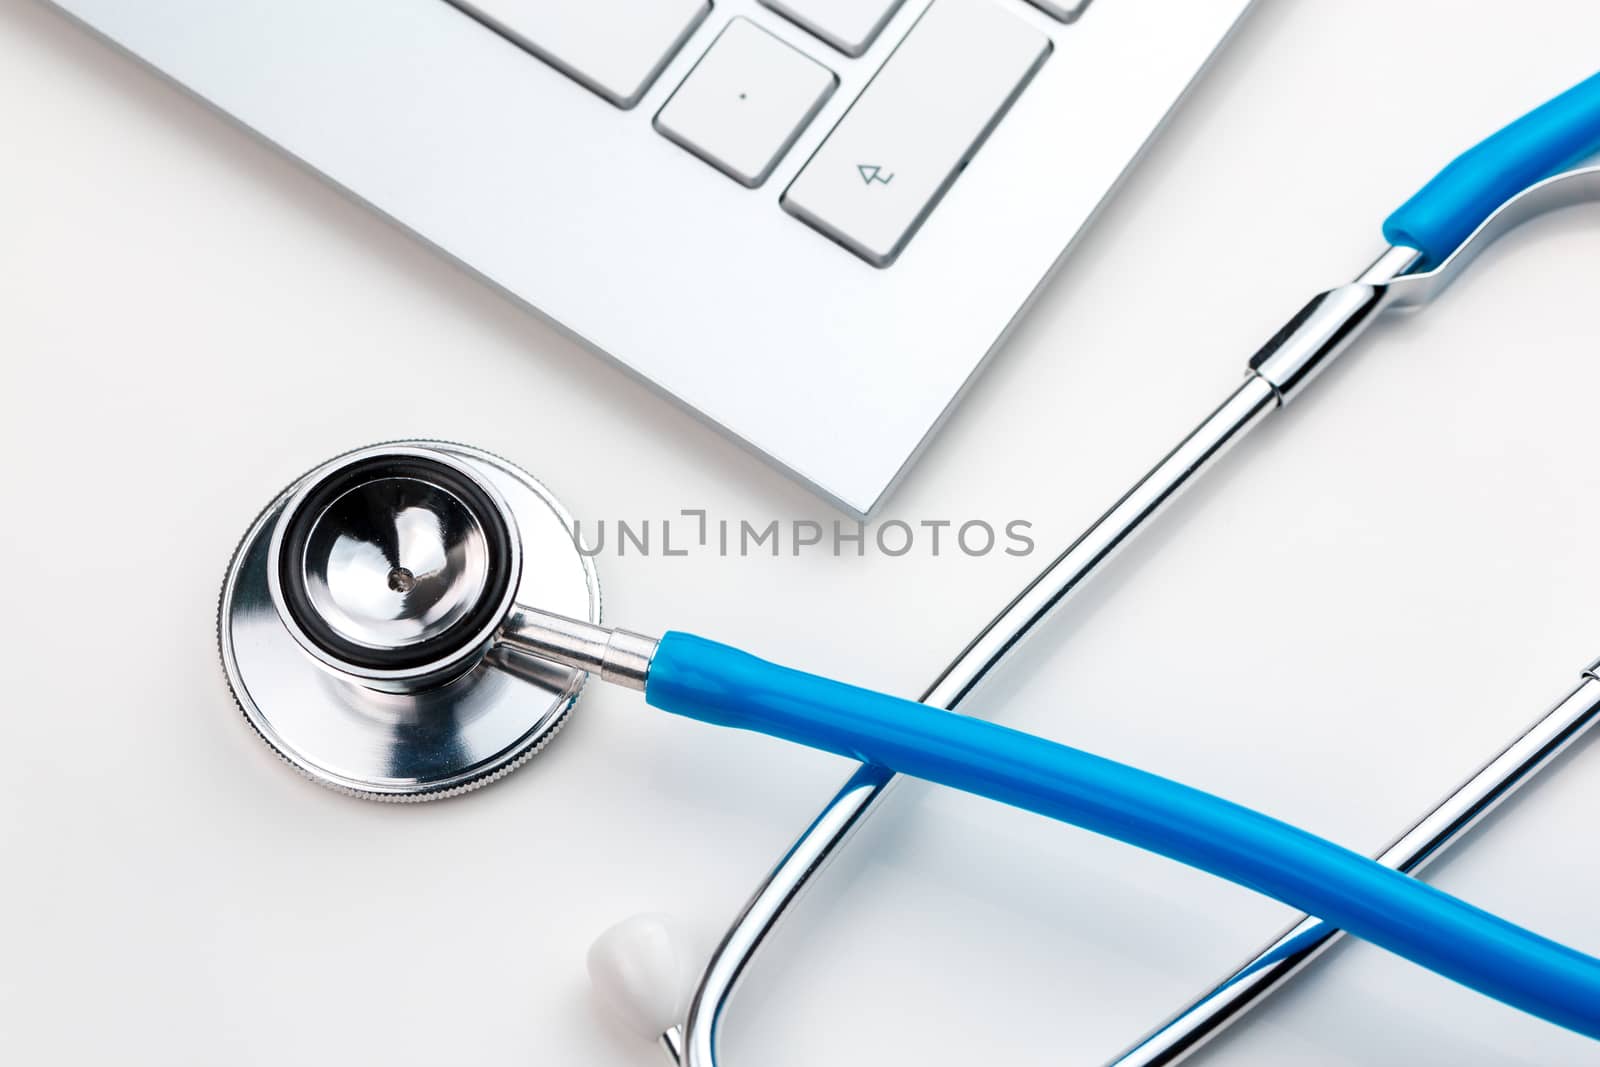 A medical stethoscope on keyboard